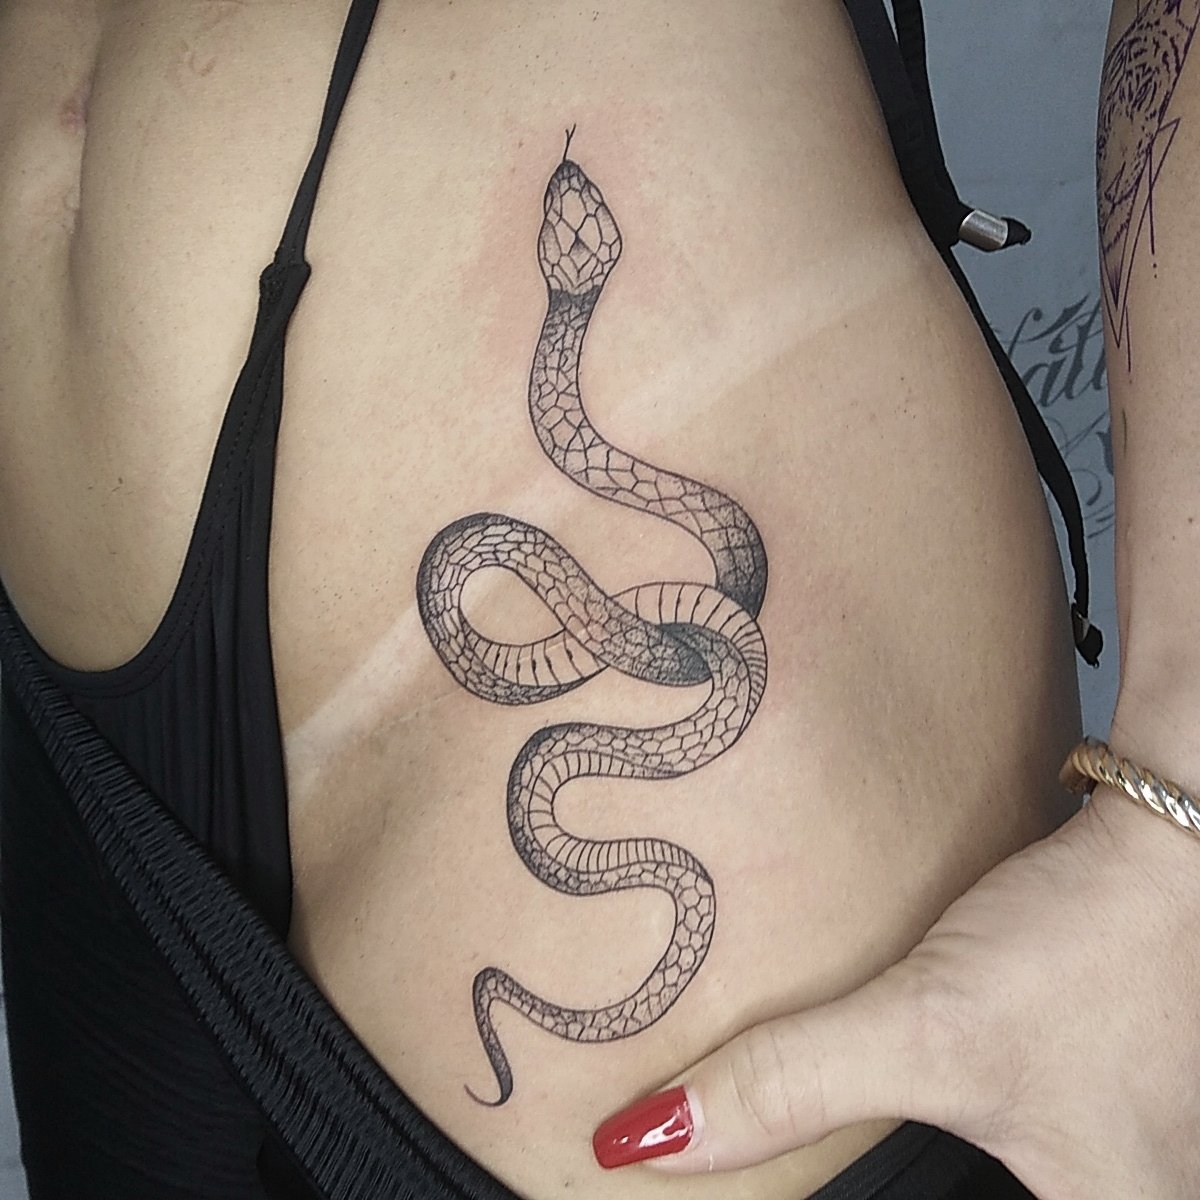 Tattoo uploaded by Justine Morrow  Snake tattoo by Mike End MikeEnd  Illustrative snake ribtattoo sidetattoo torsotattoo nature oldschool   Tattoodo